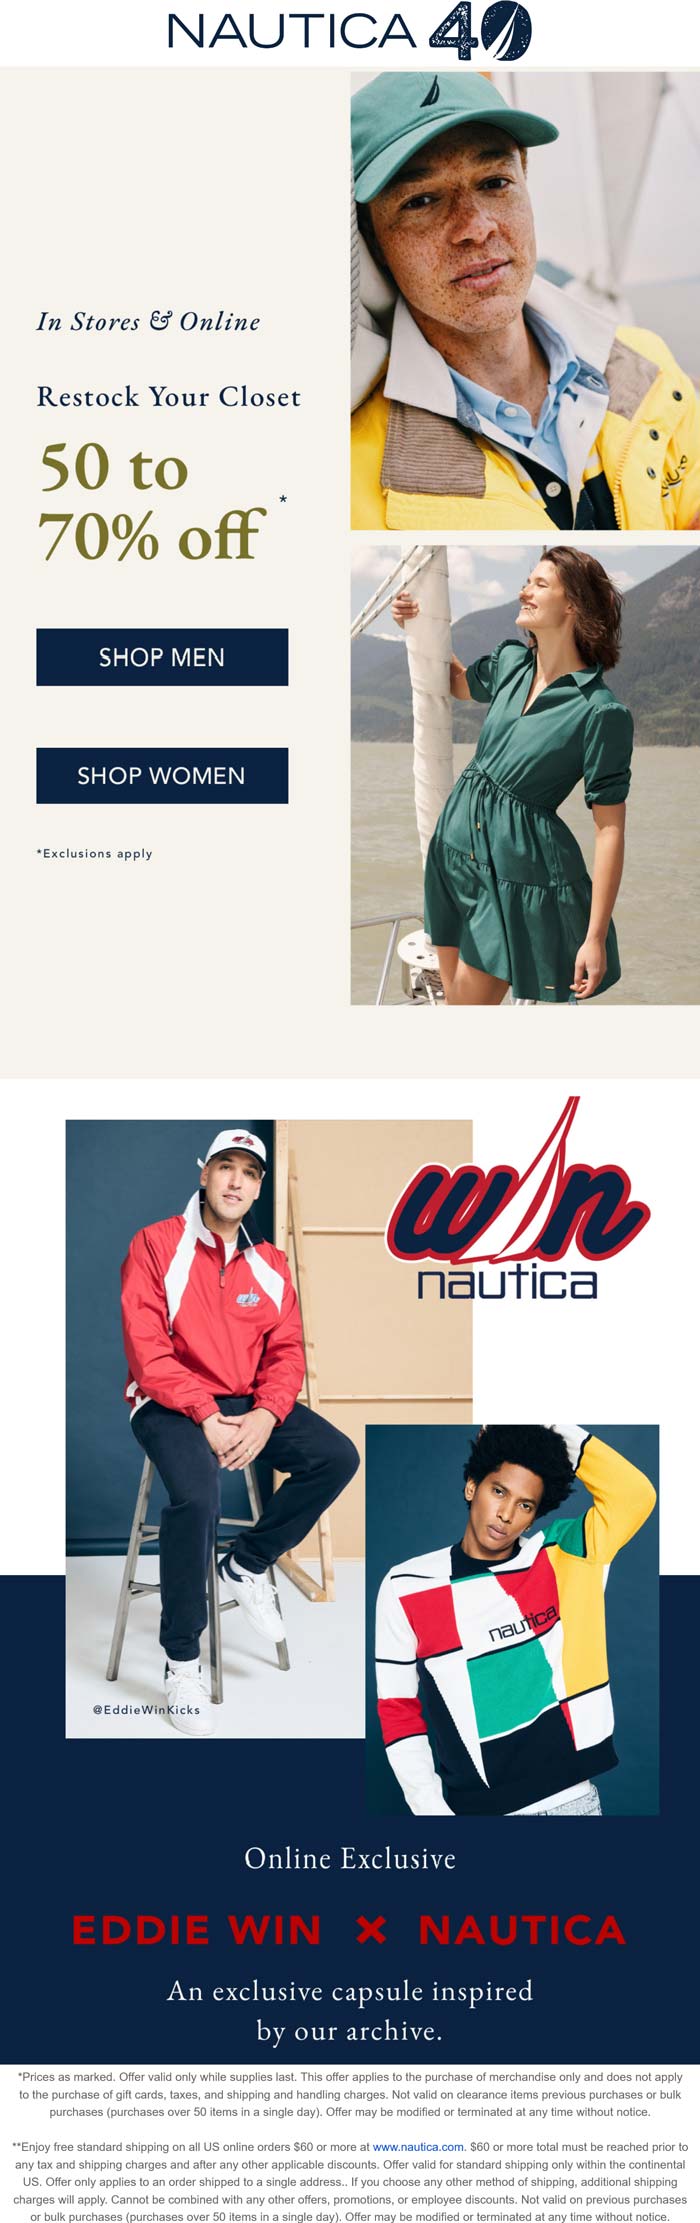 Nautica stores Coupon  50-70% off at Nautica, ditto online #nautica 